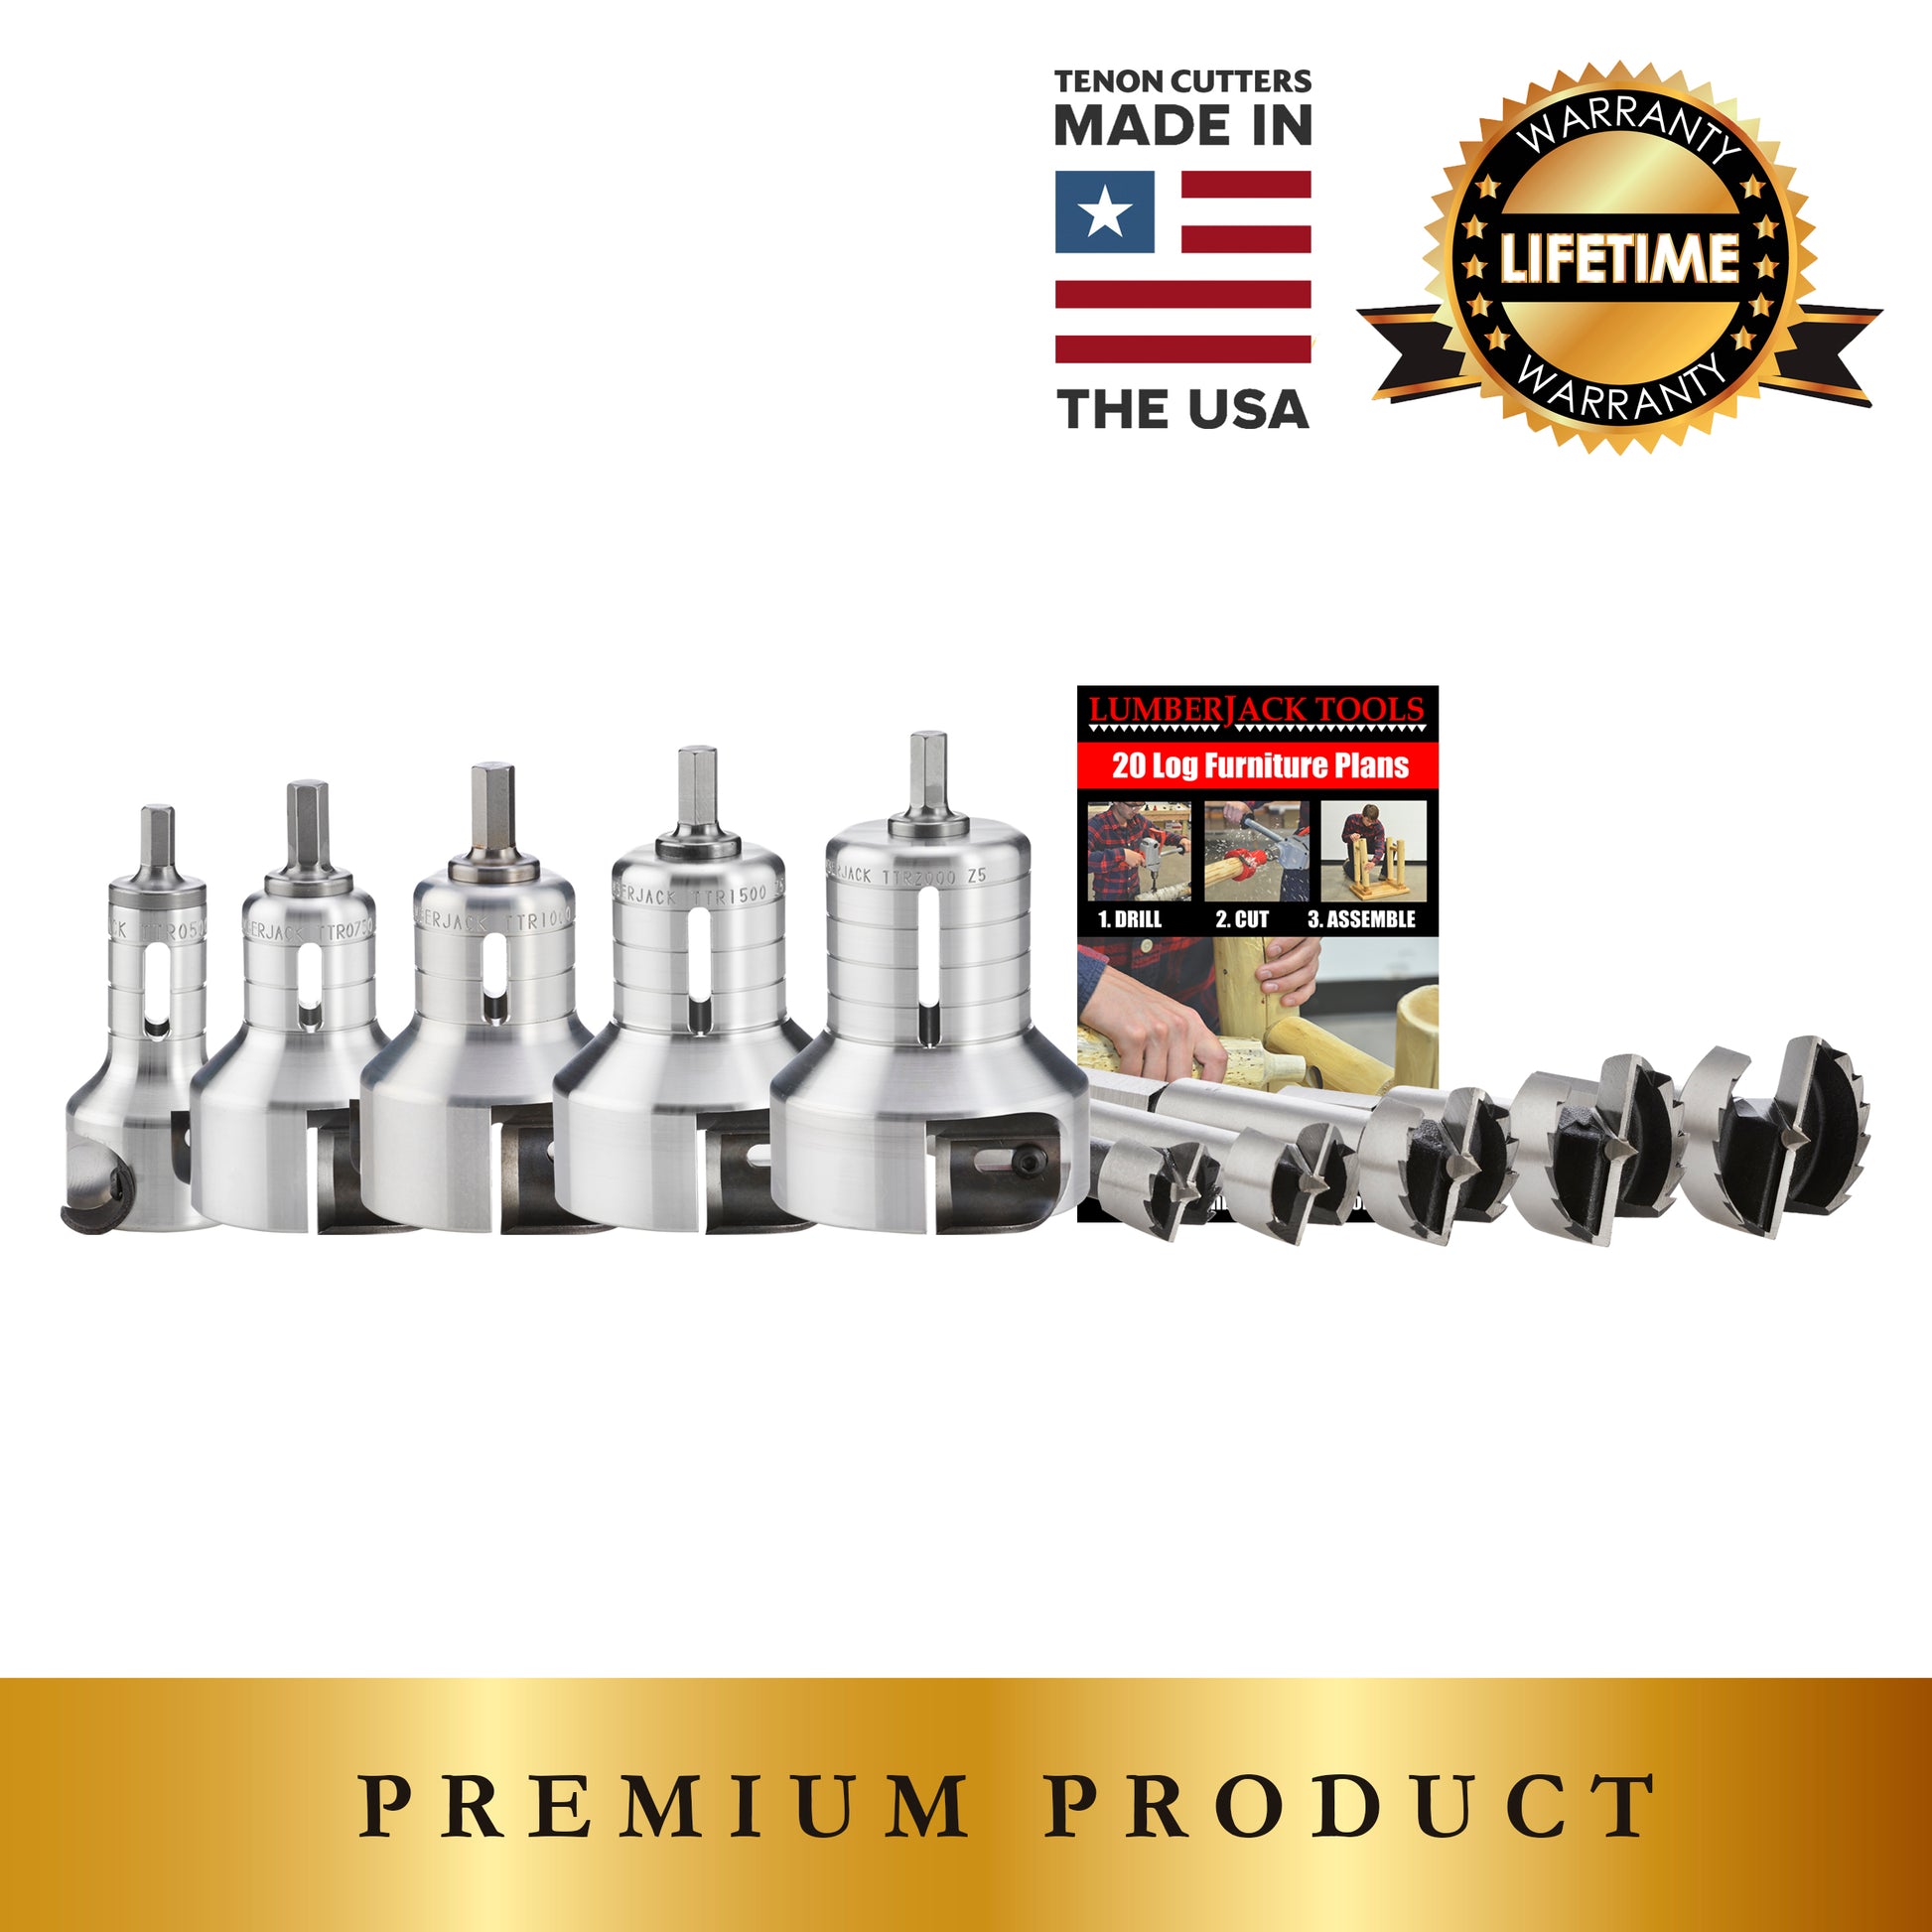 Pro Series Professional Kit - USA made premium tenon cutters